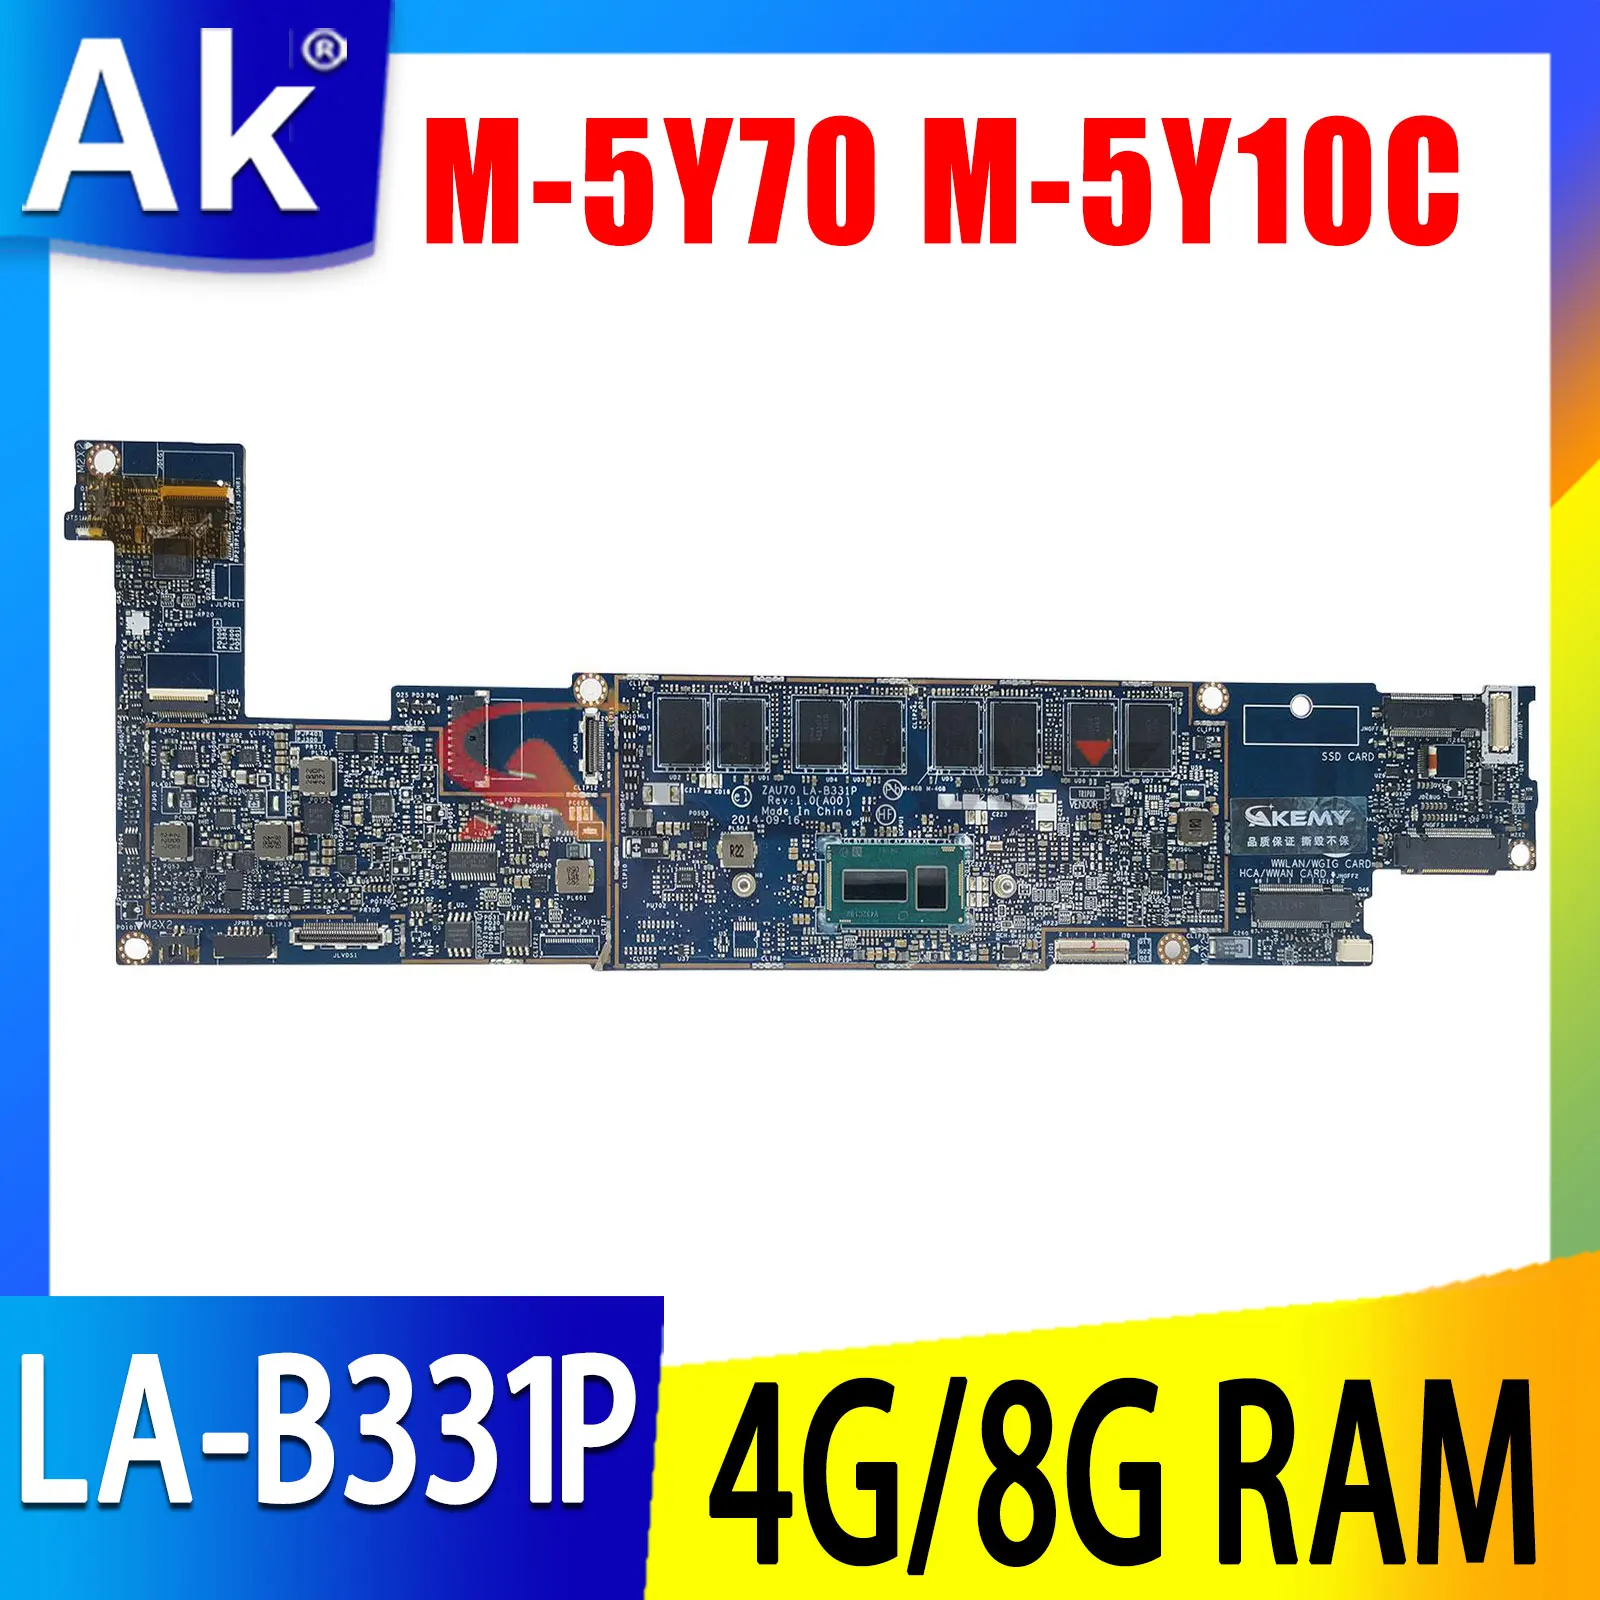 

For DELL Latitude 7350 LA-B331P Notebook Motherboard M-5Y70 M-5Y10C with 4G/8G RAM Mainboard CN-0057NK 0J97J1 100% work